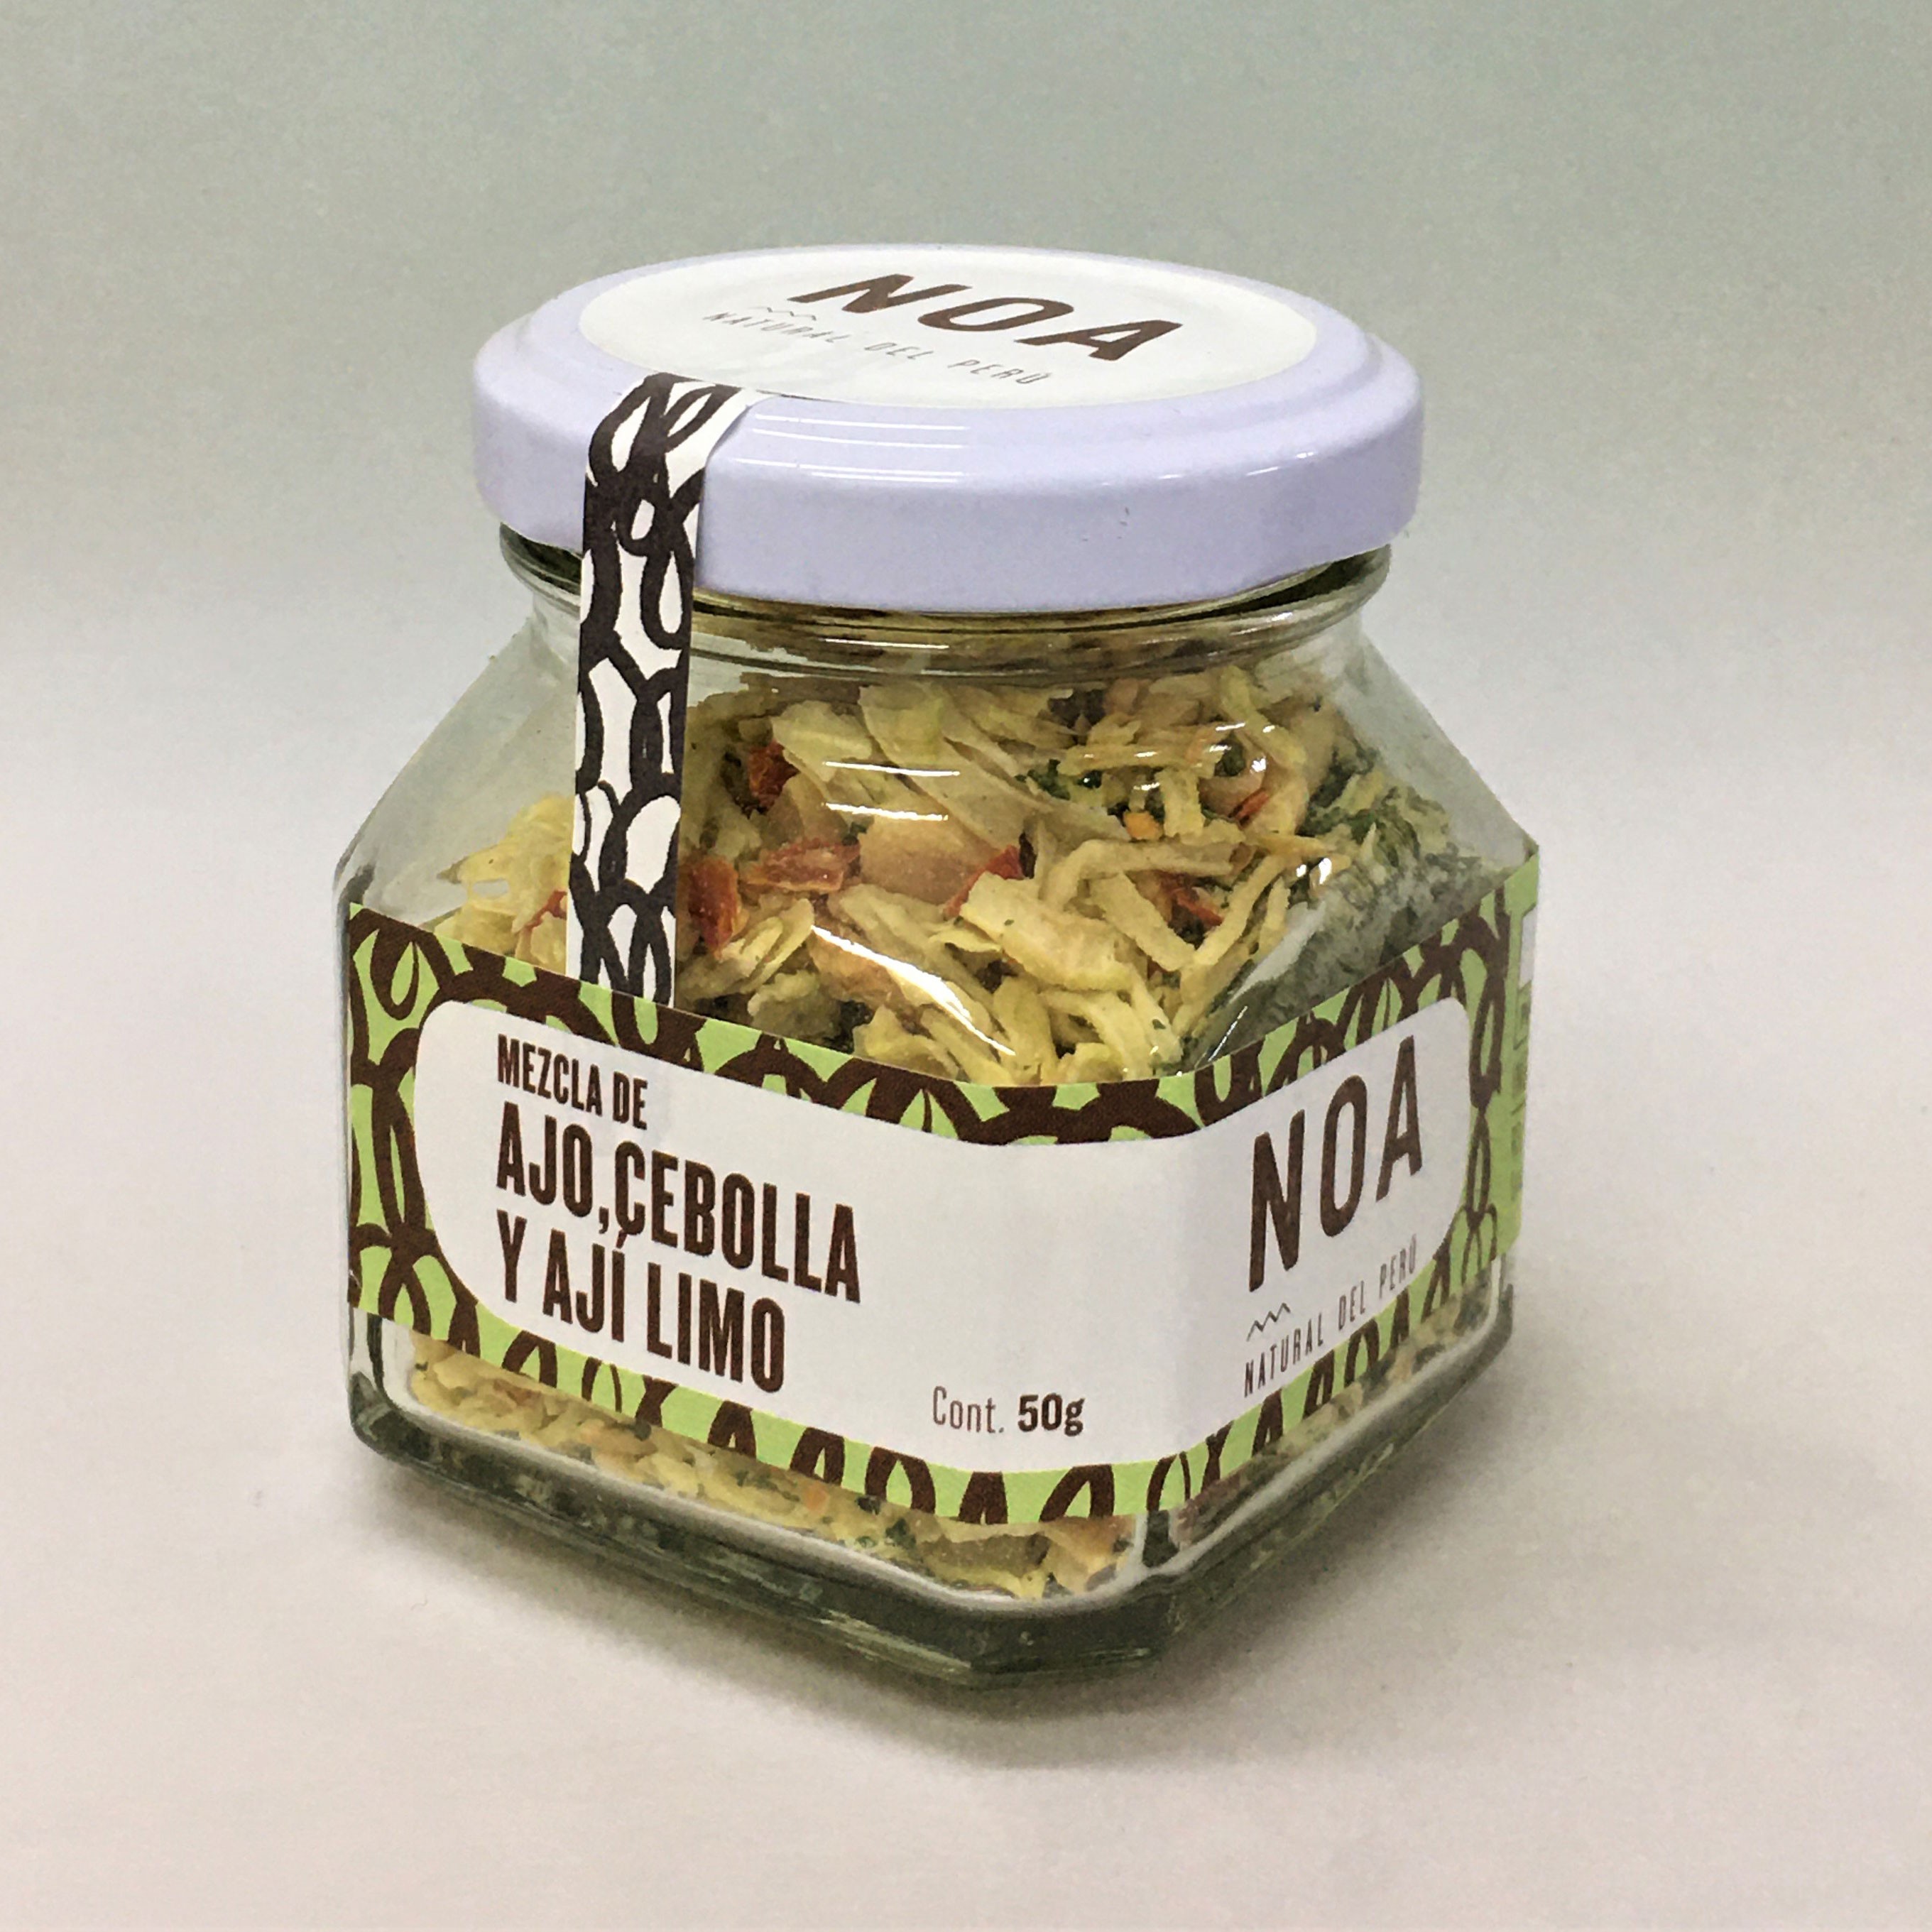 Garlic, Onion and Ají Limo Chili Spice Mix Noa 50g - Buy - EL INTI - The  Peruvian Shop